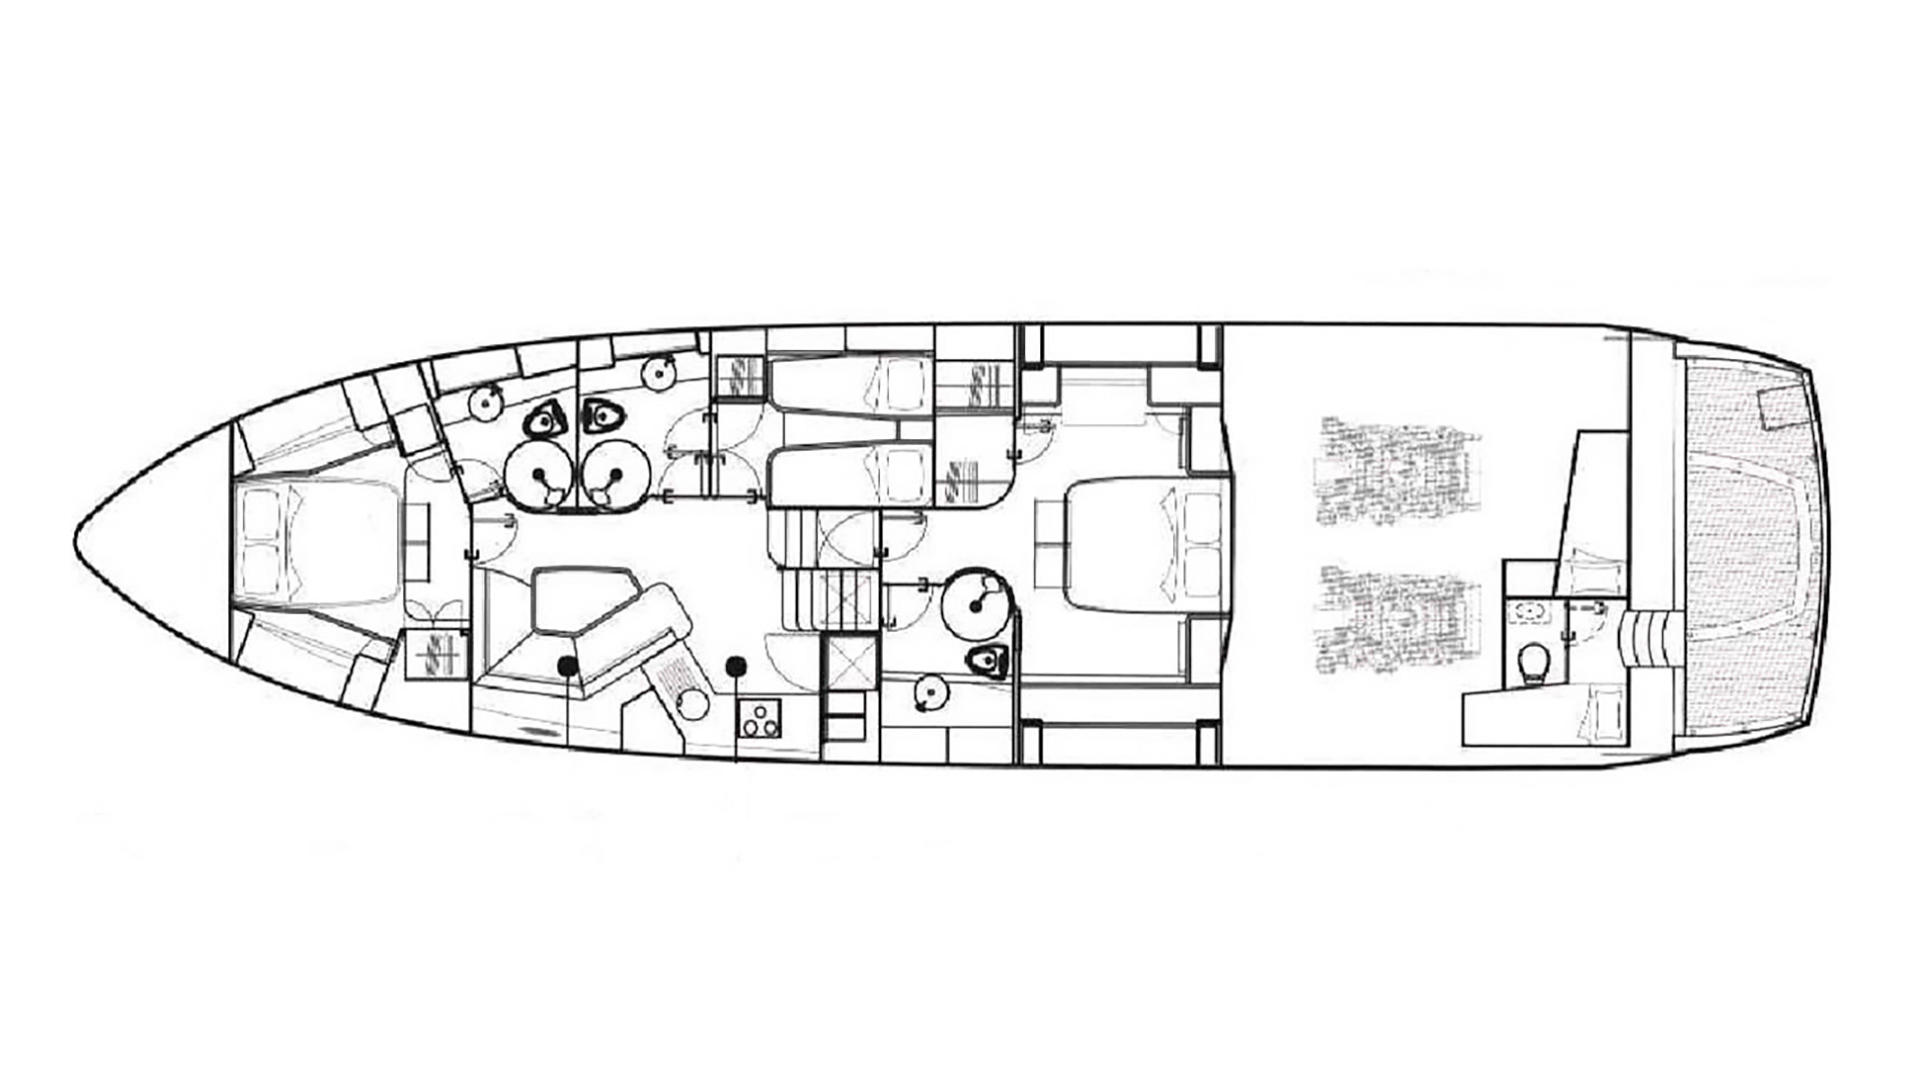 34-Glorious-layout-lower-deck .JPG